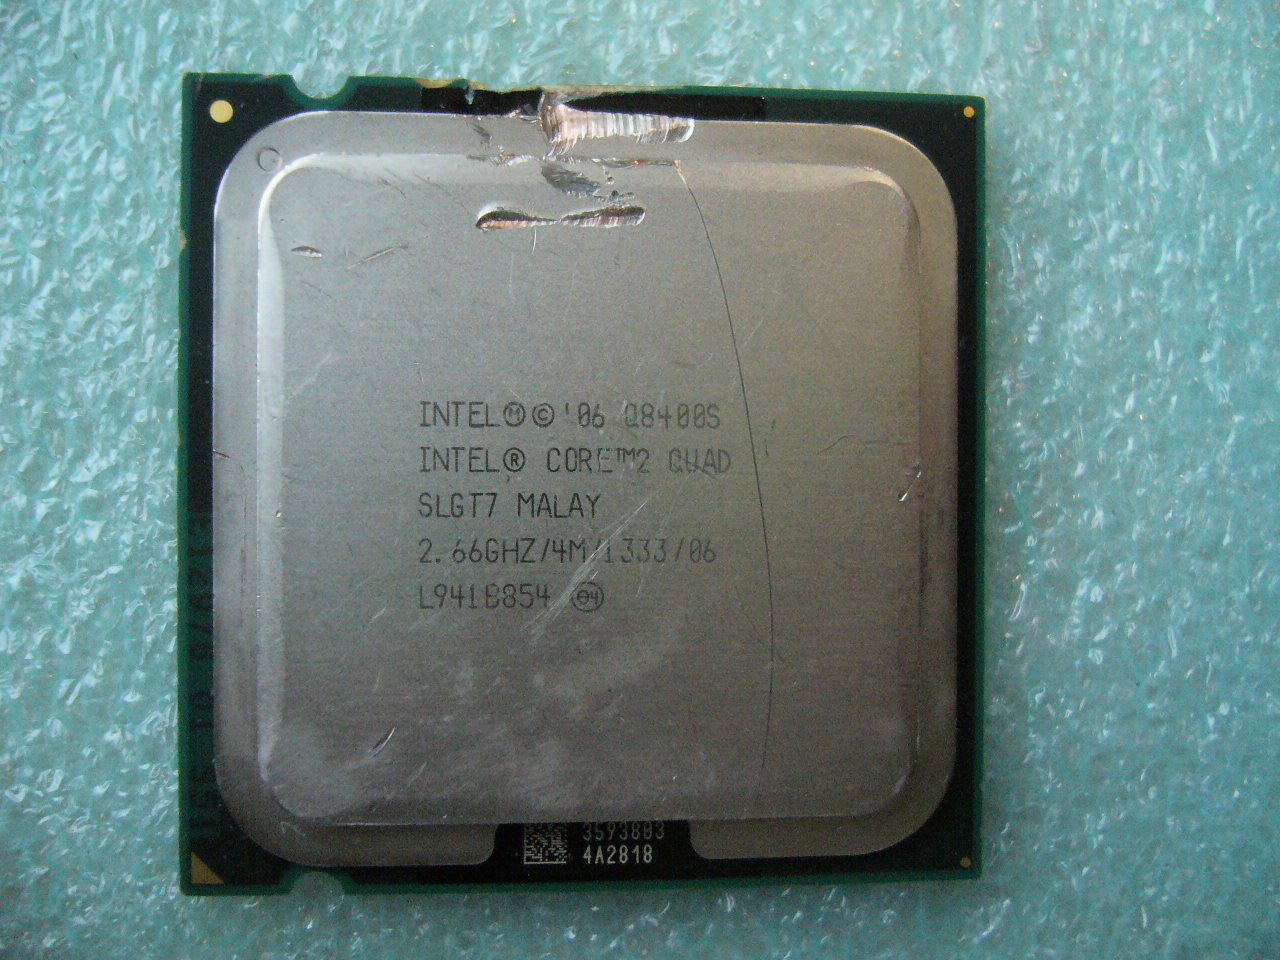 QTY 1x INTEL Core2 Quad Q8400S CPU 2.66GHz/4MB/1333Mhz LGA775 SLGT7 65W damaged